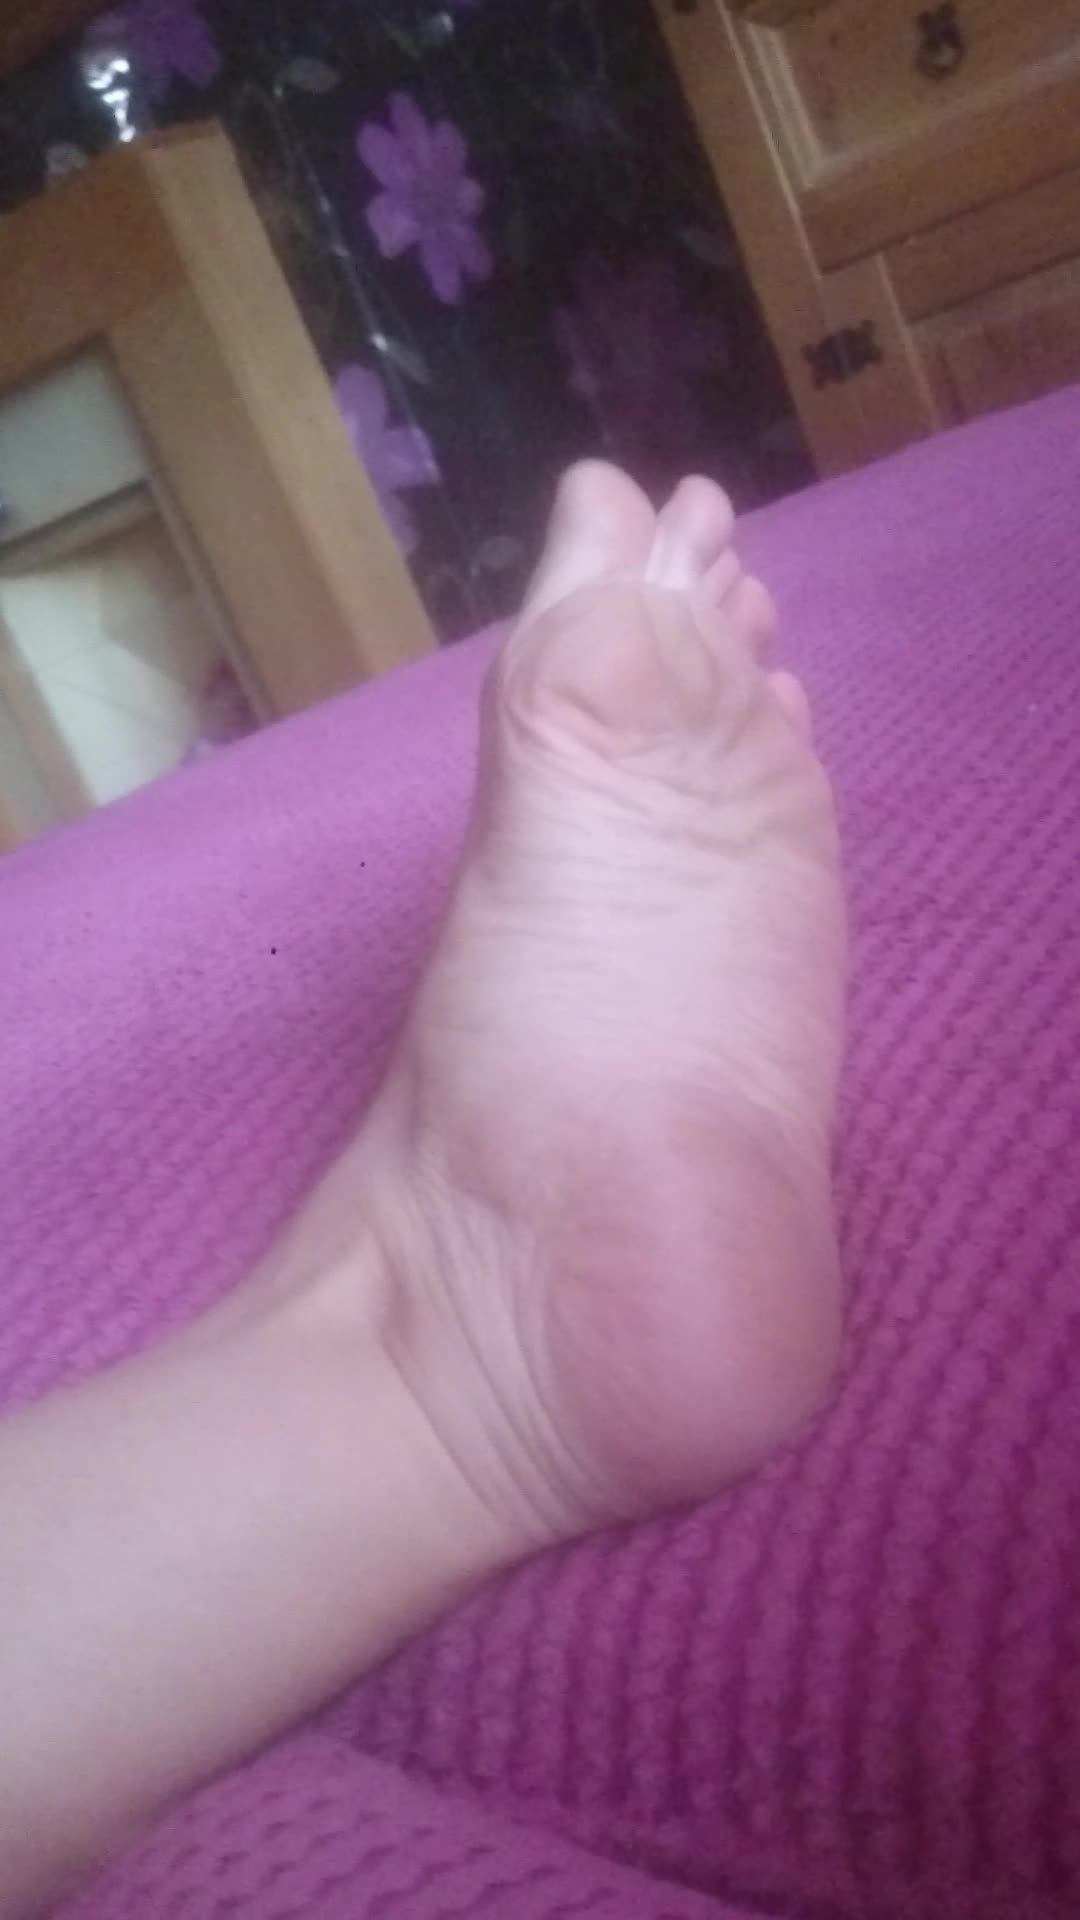 Dirty Feet Lovers